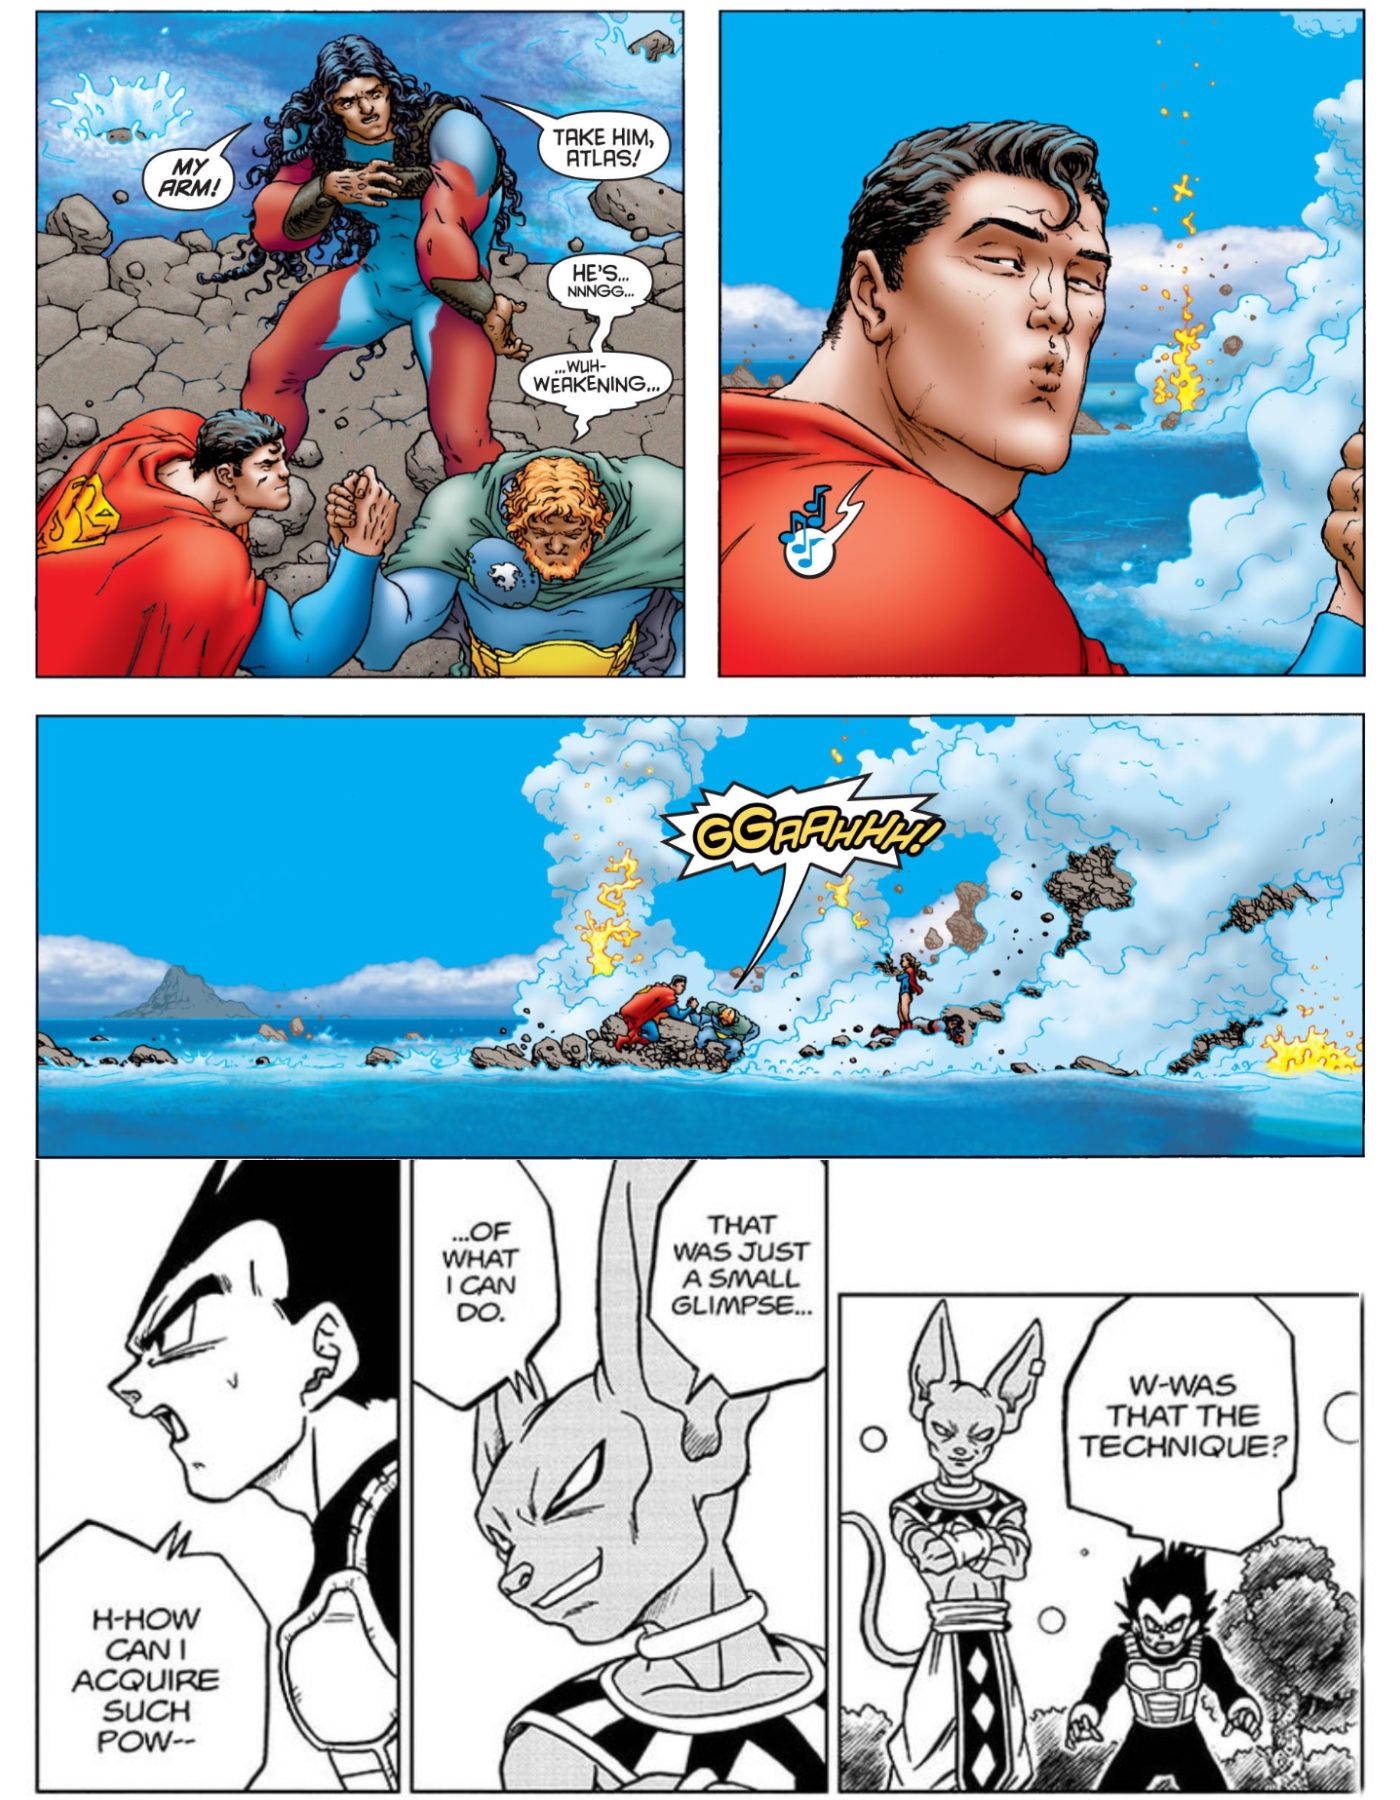 Dragon Ball’s Vegeta Vs. Superman, Who’d Win in a Fight?